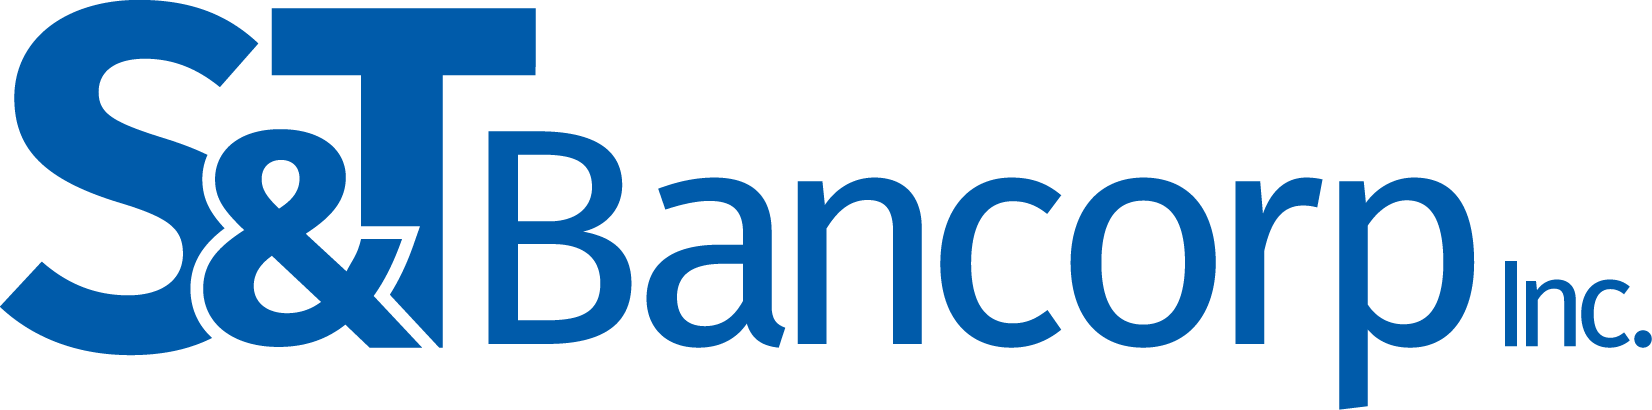 S&T Bancorp Inc logo